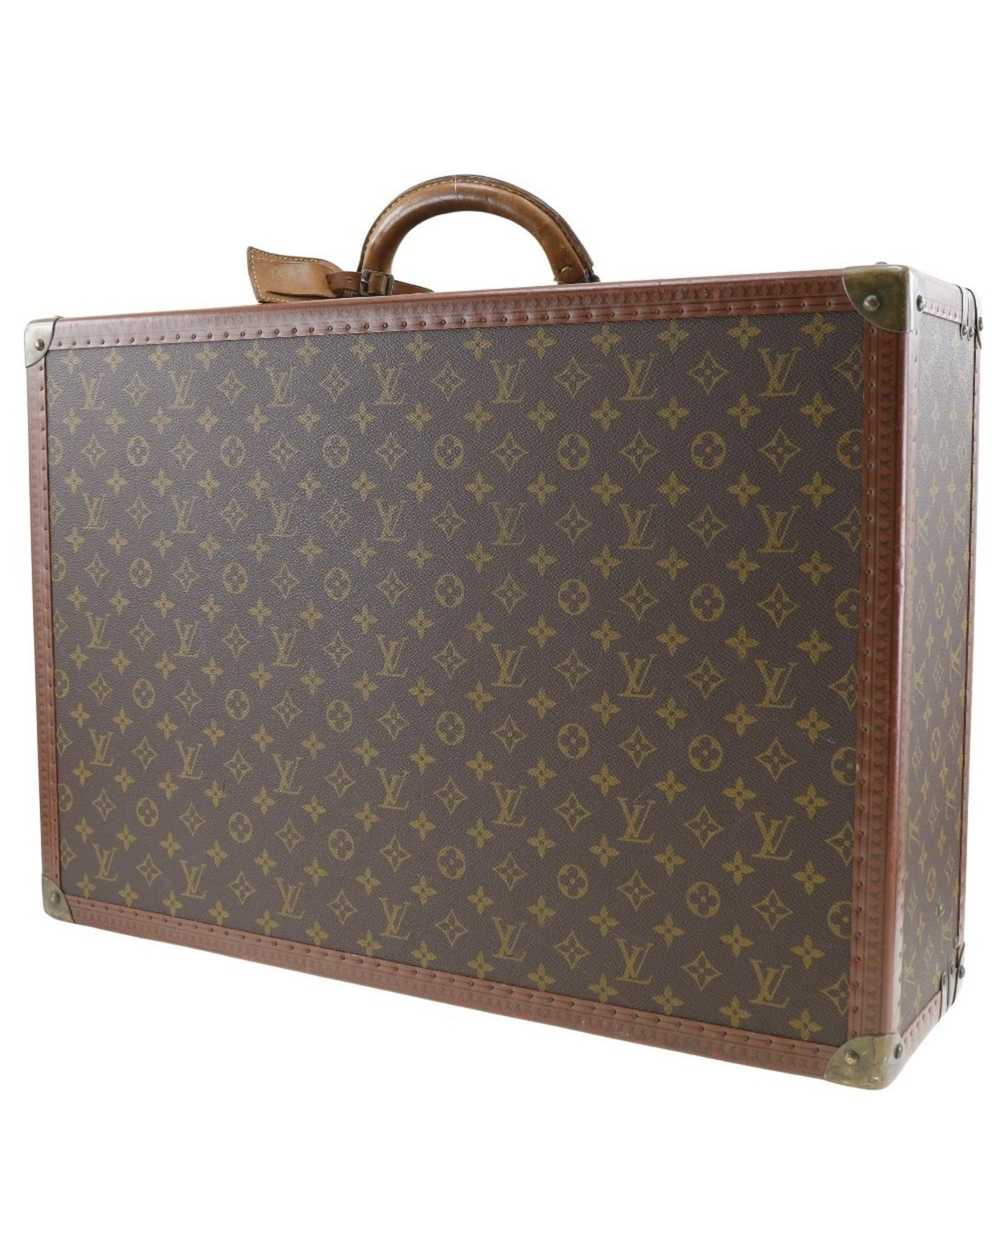 Louis Vuitton Canvas Bisten Bag - image 2